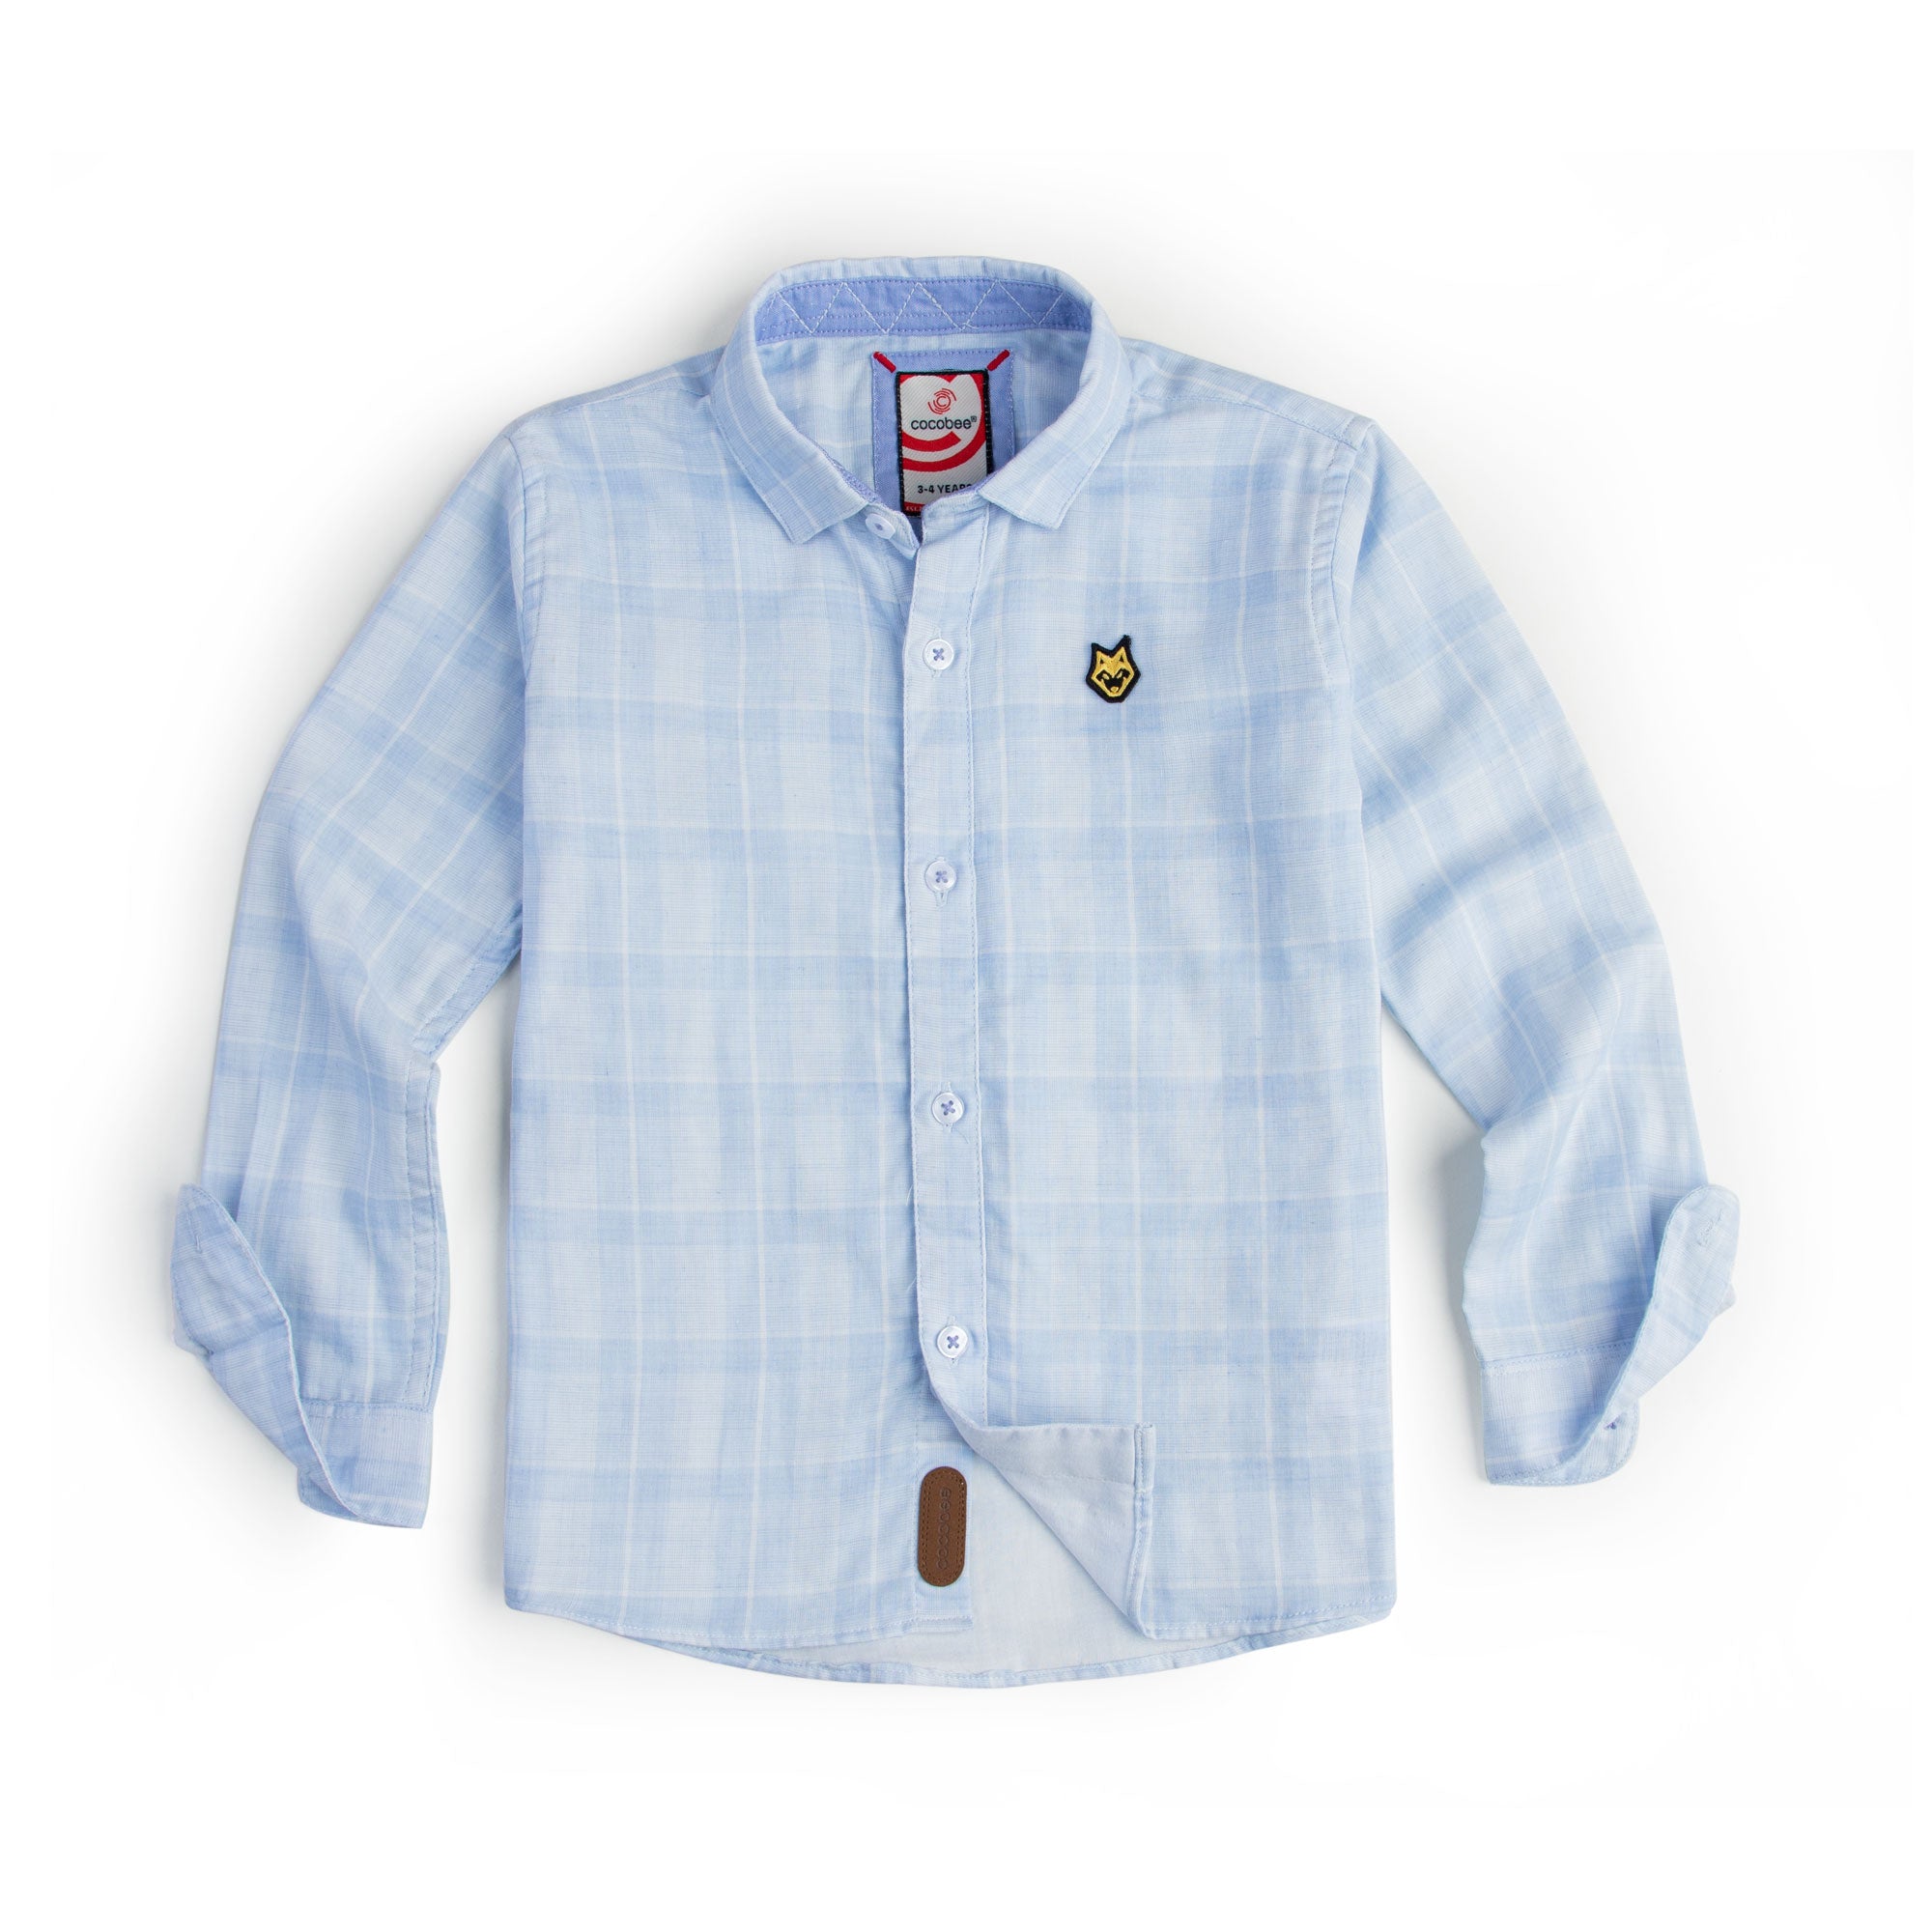 Winter Cotton Checkered Shirt